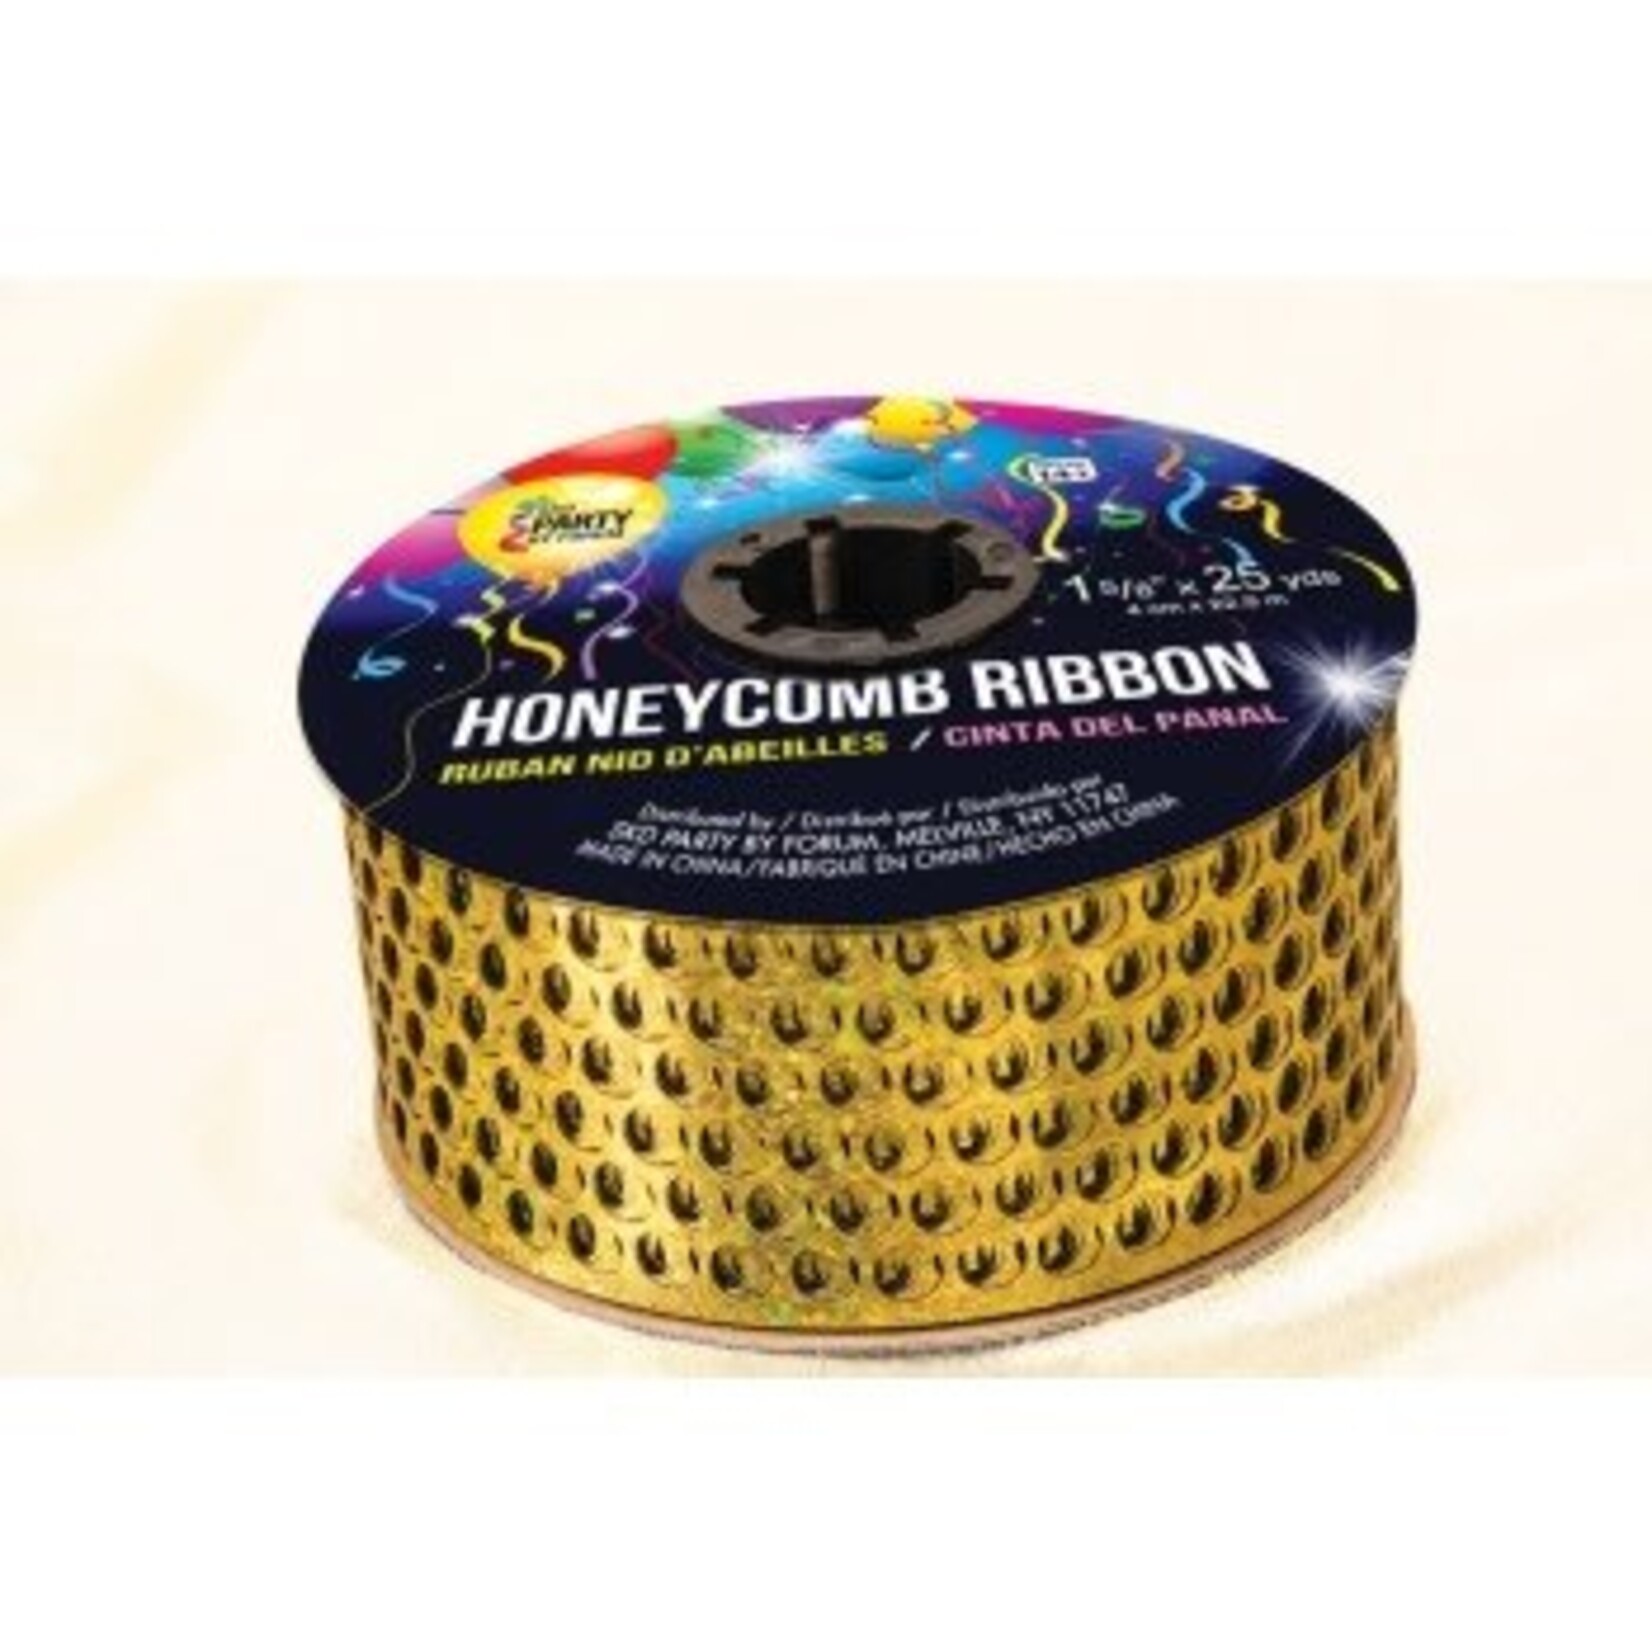 Honeycomb Ribbon 1 5/8"